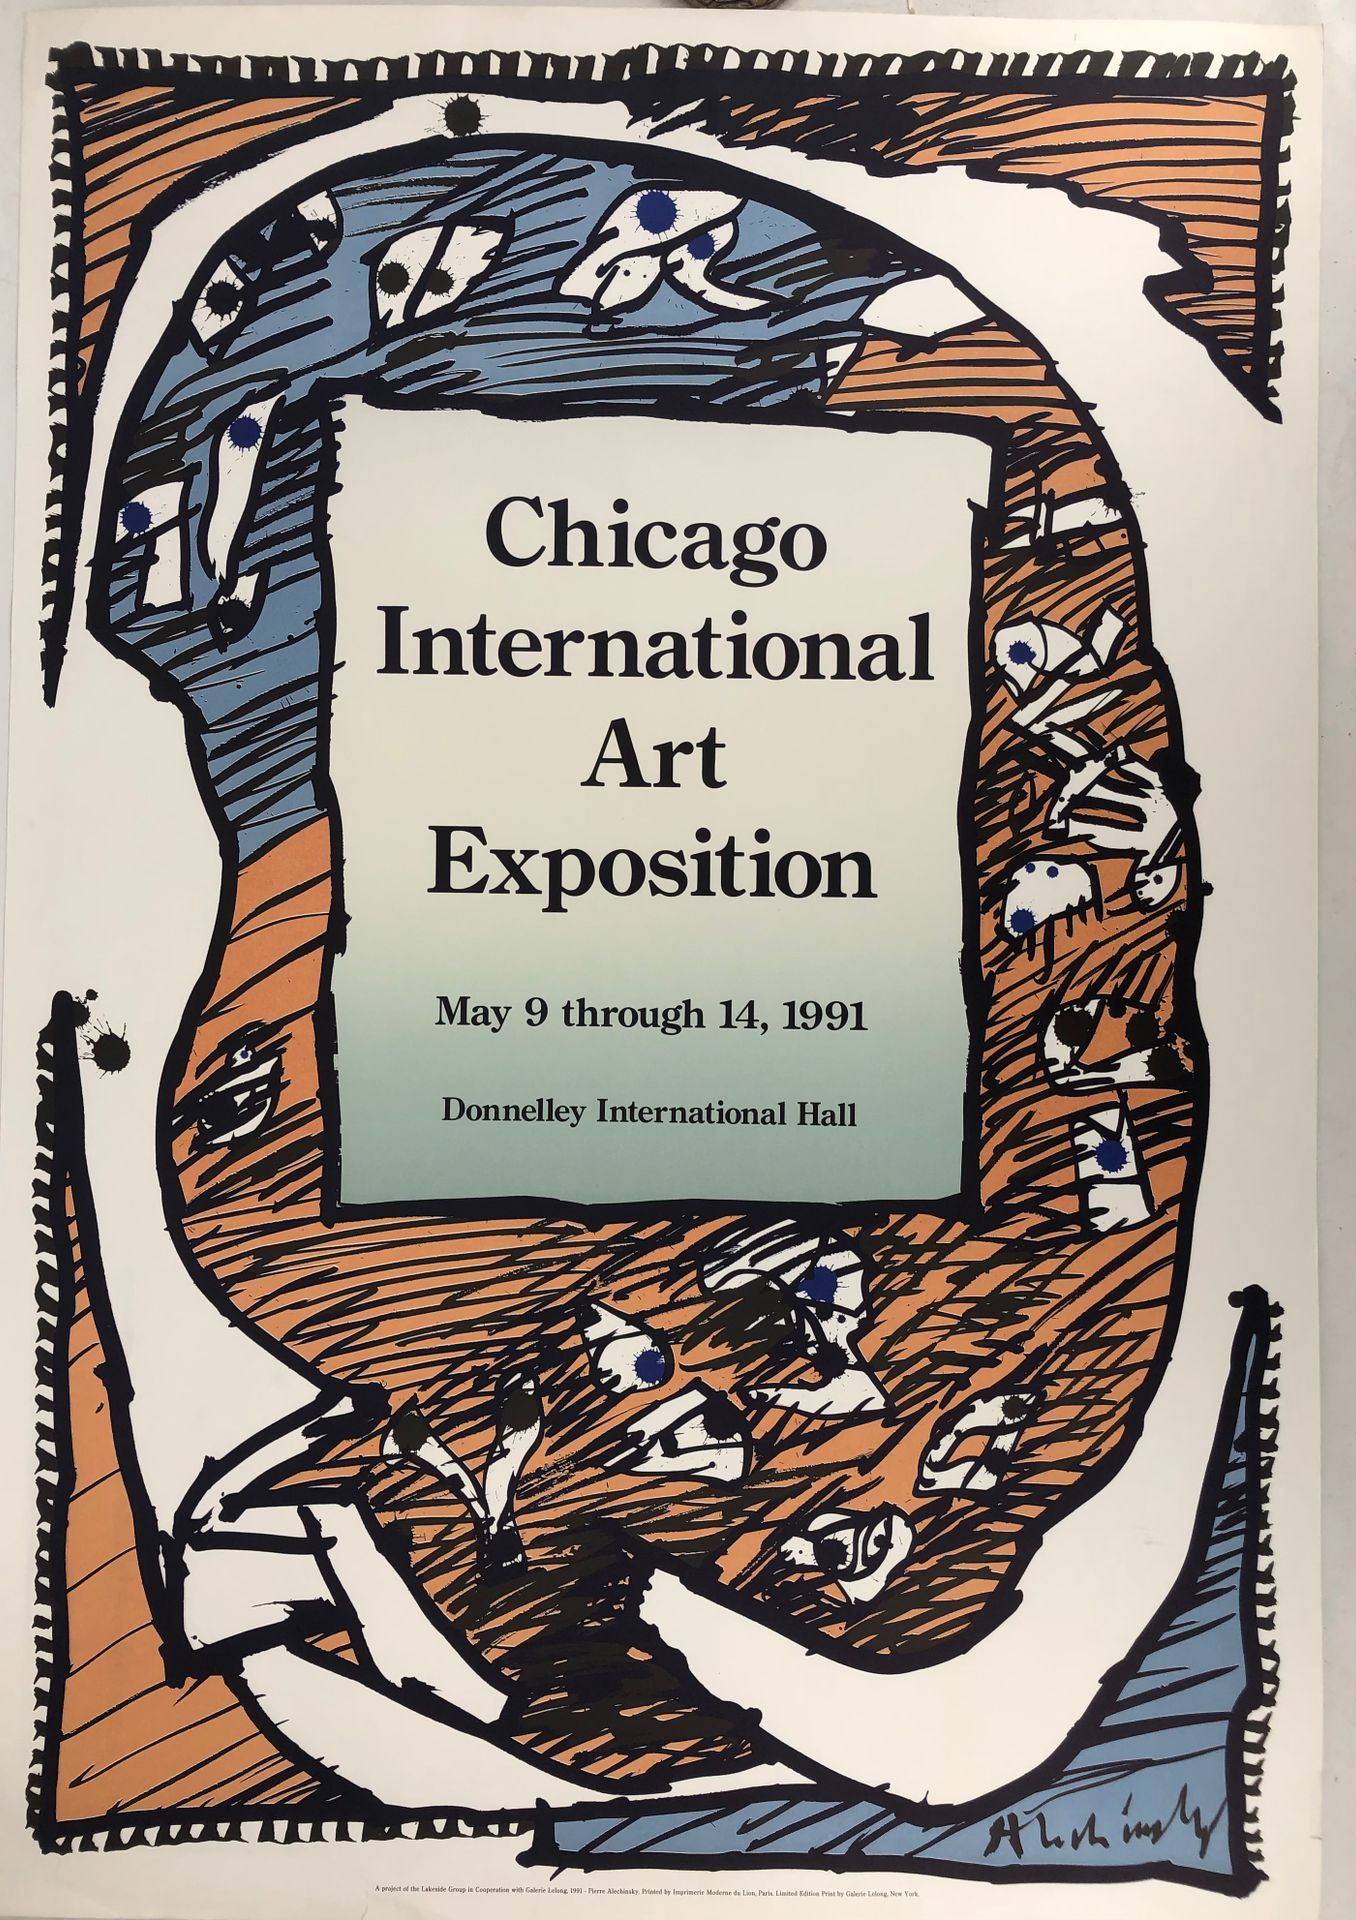 Pierre ALECHINSKY Pierre ALECHINSKY

芝加哥国际艺术展

平版印刷的原始海报

格式90 x 76厘米。

完美的状态


&hellip;